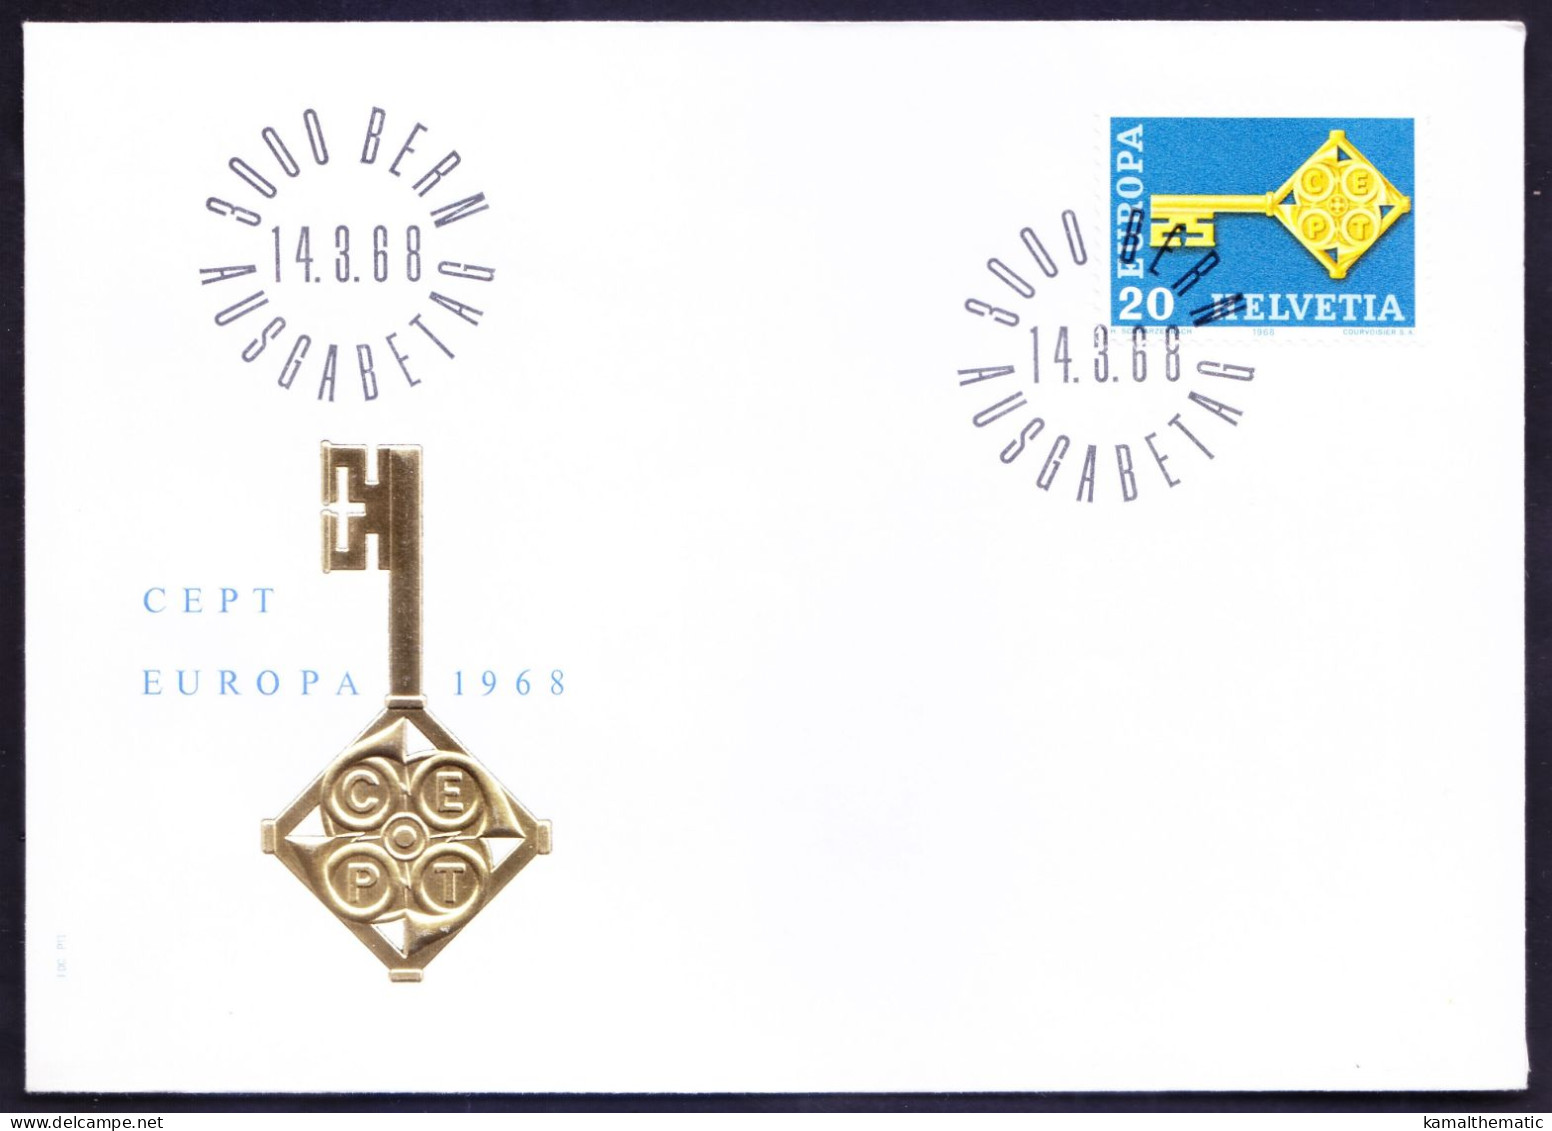 Switzerland 1968 FDC, Europa, Key With CEPT Badge, Bern Cancellation - 1968